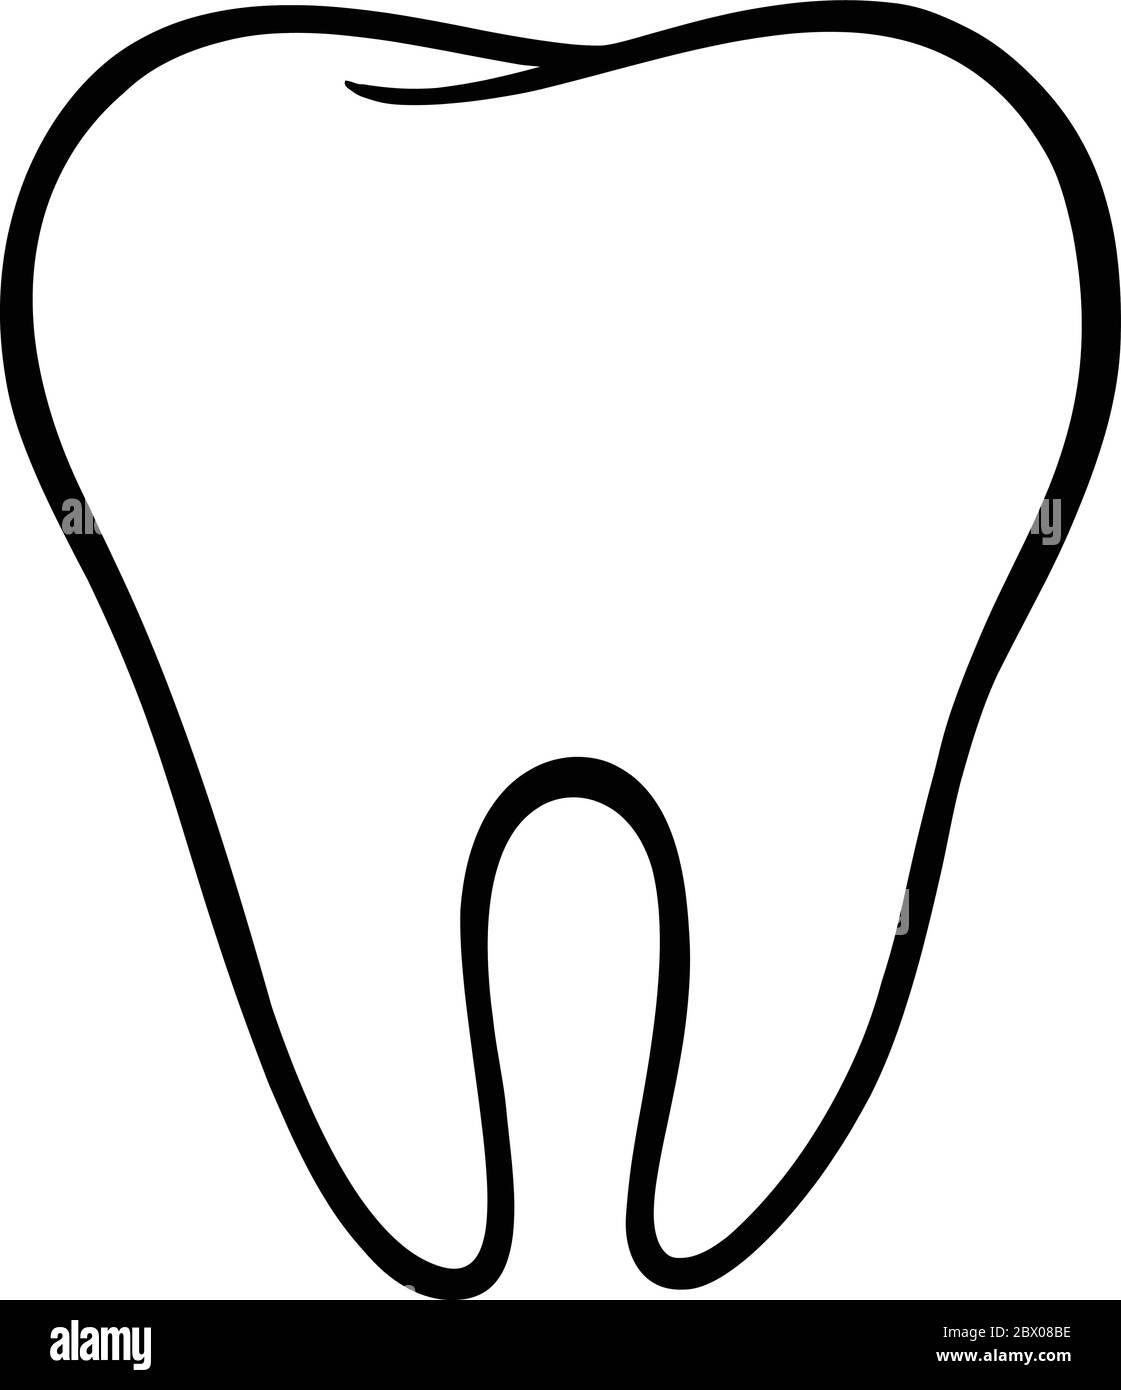 Zahnsymbol – eine Illustration eines Zahnsymbols. Stock Vektor